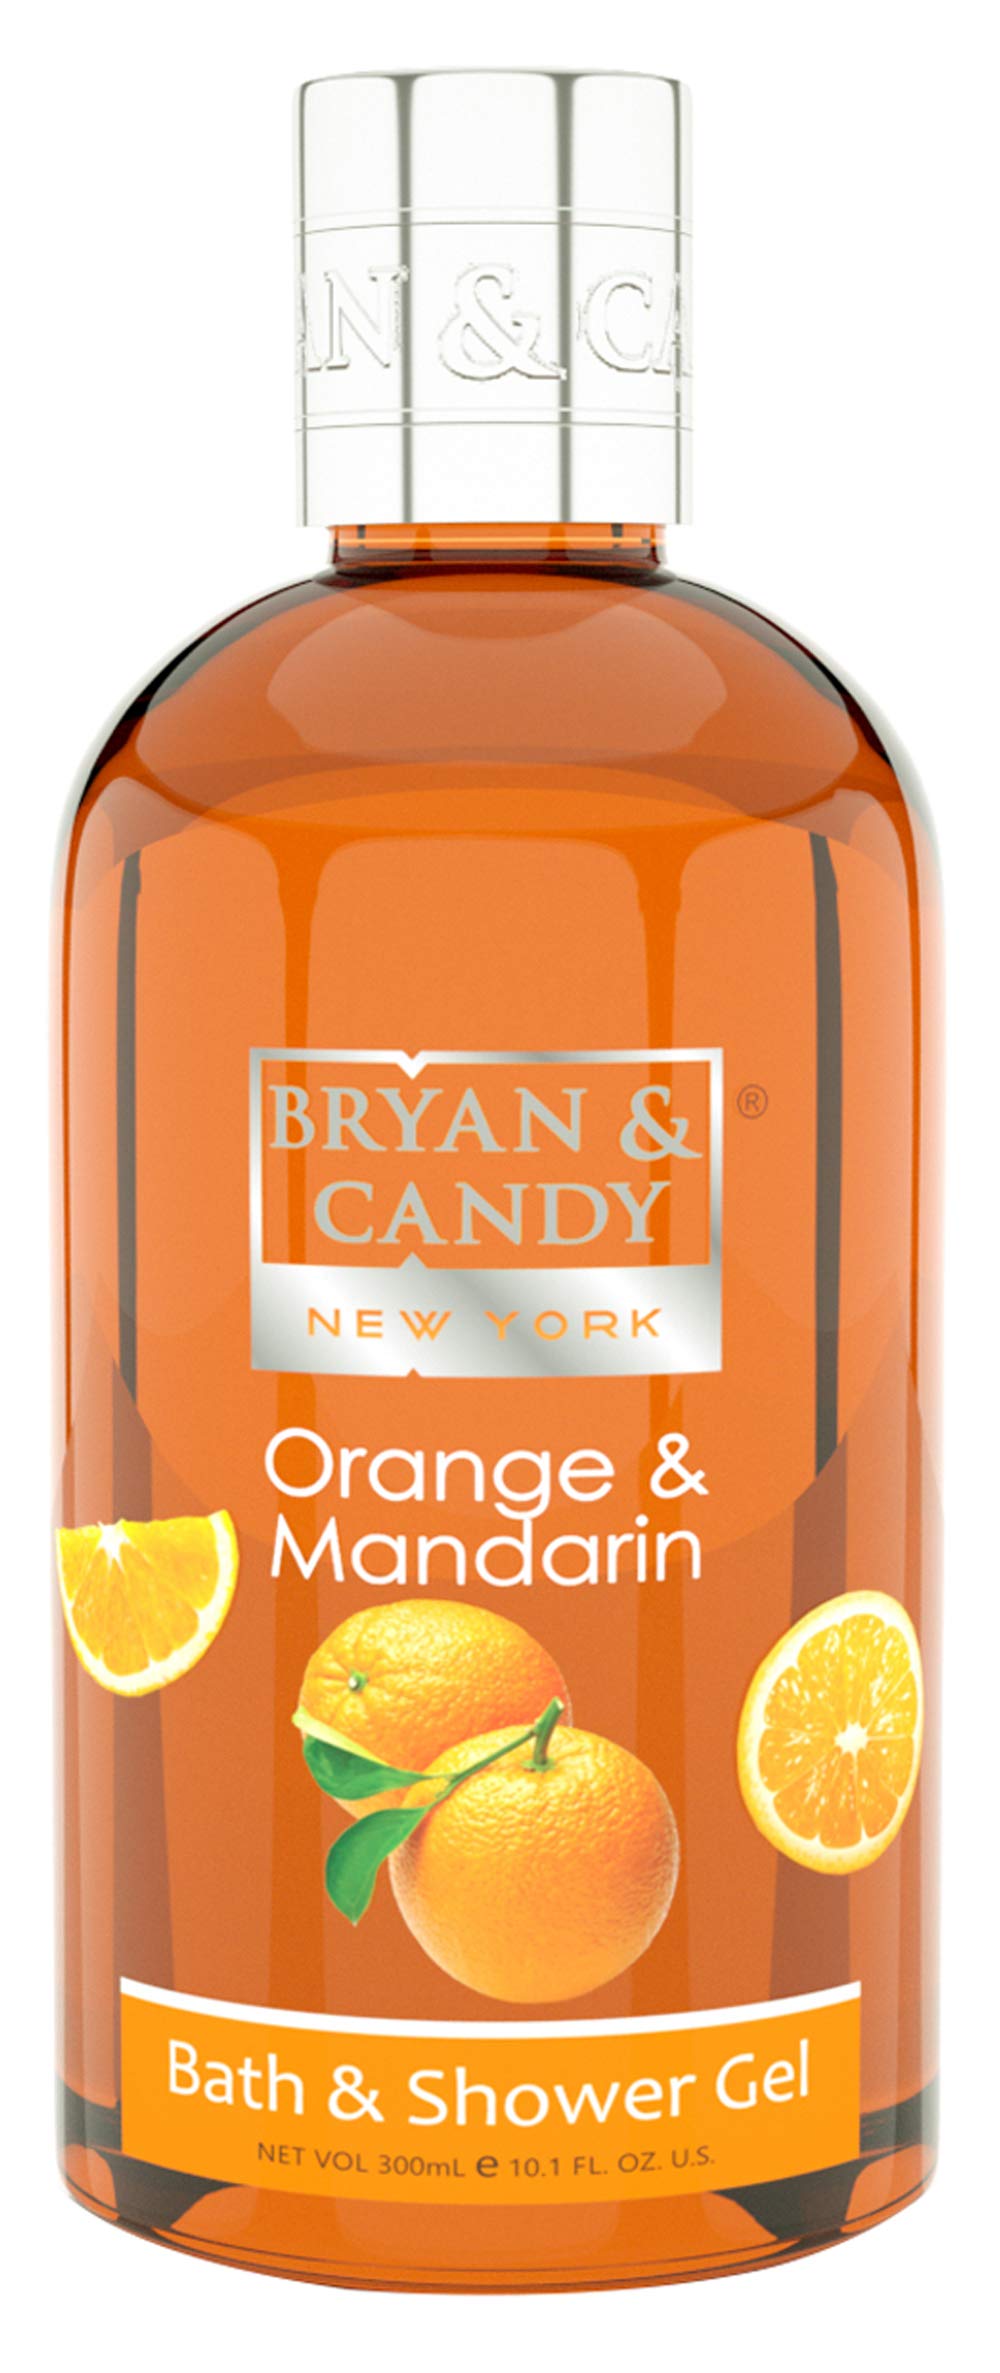 Bryan & Candy Orange and Mandarin Shower Gel (300ml) with Aloe Vera. Gentle, Moisturizing Body Wash for Soft, Supple Skin